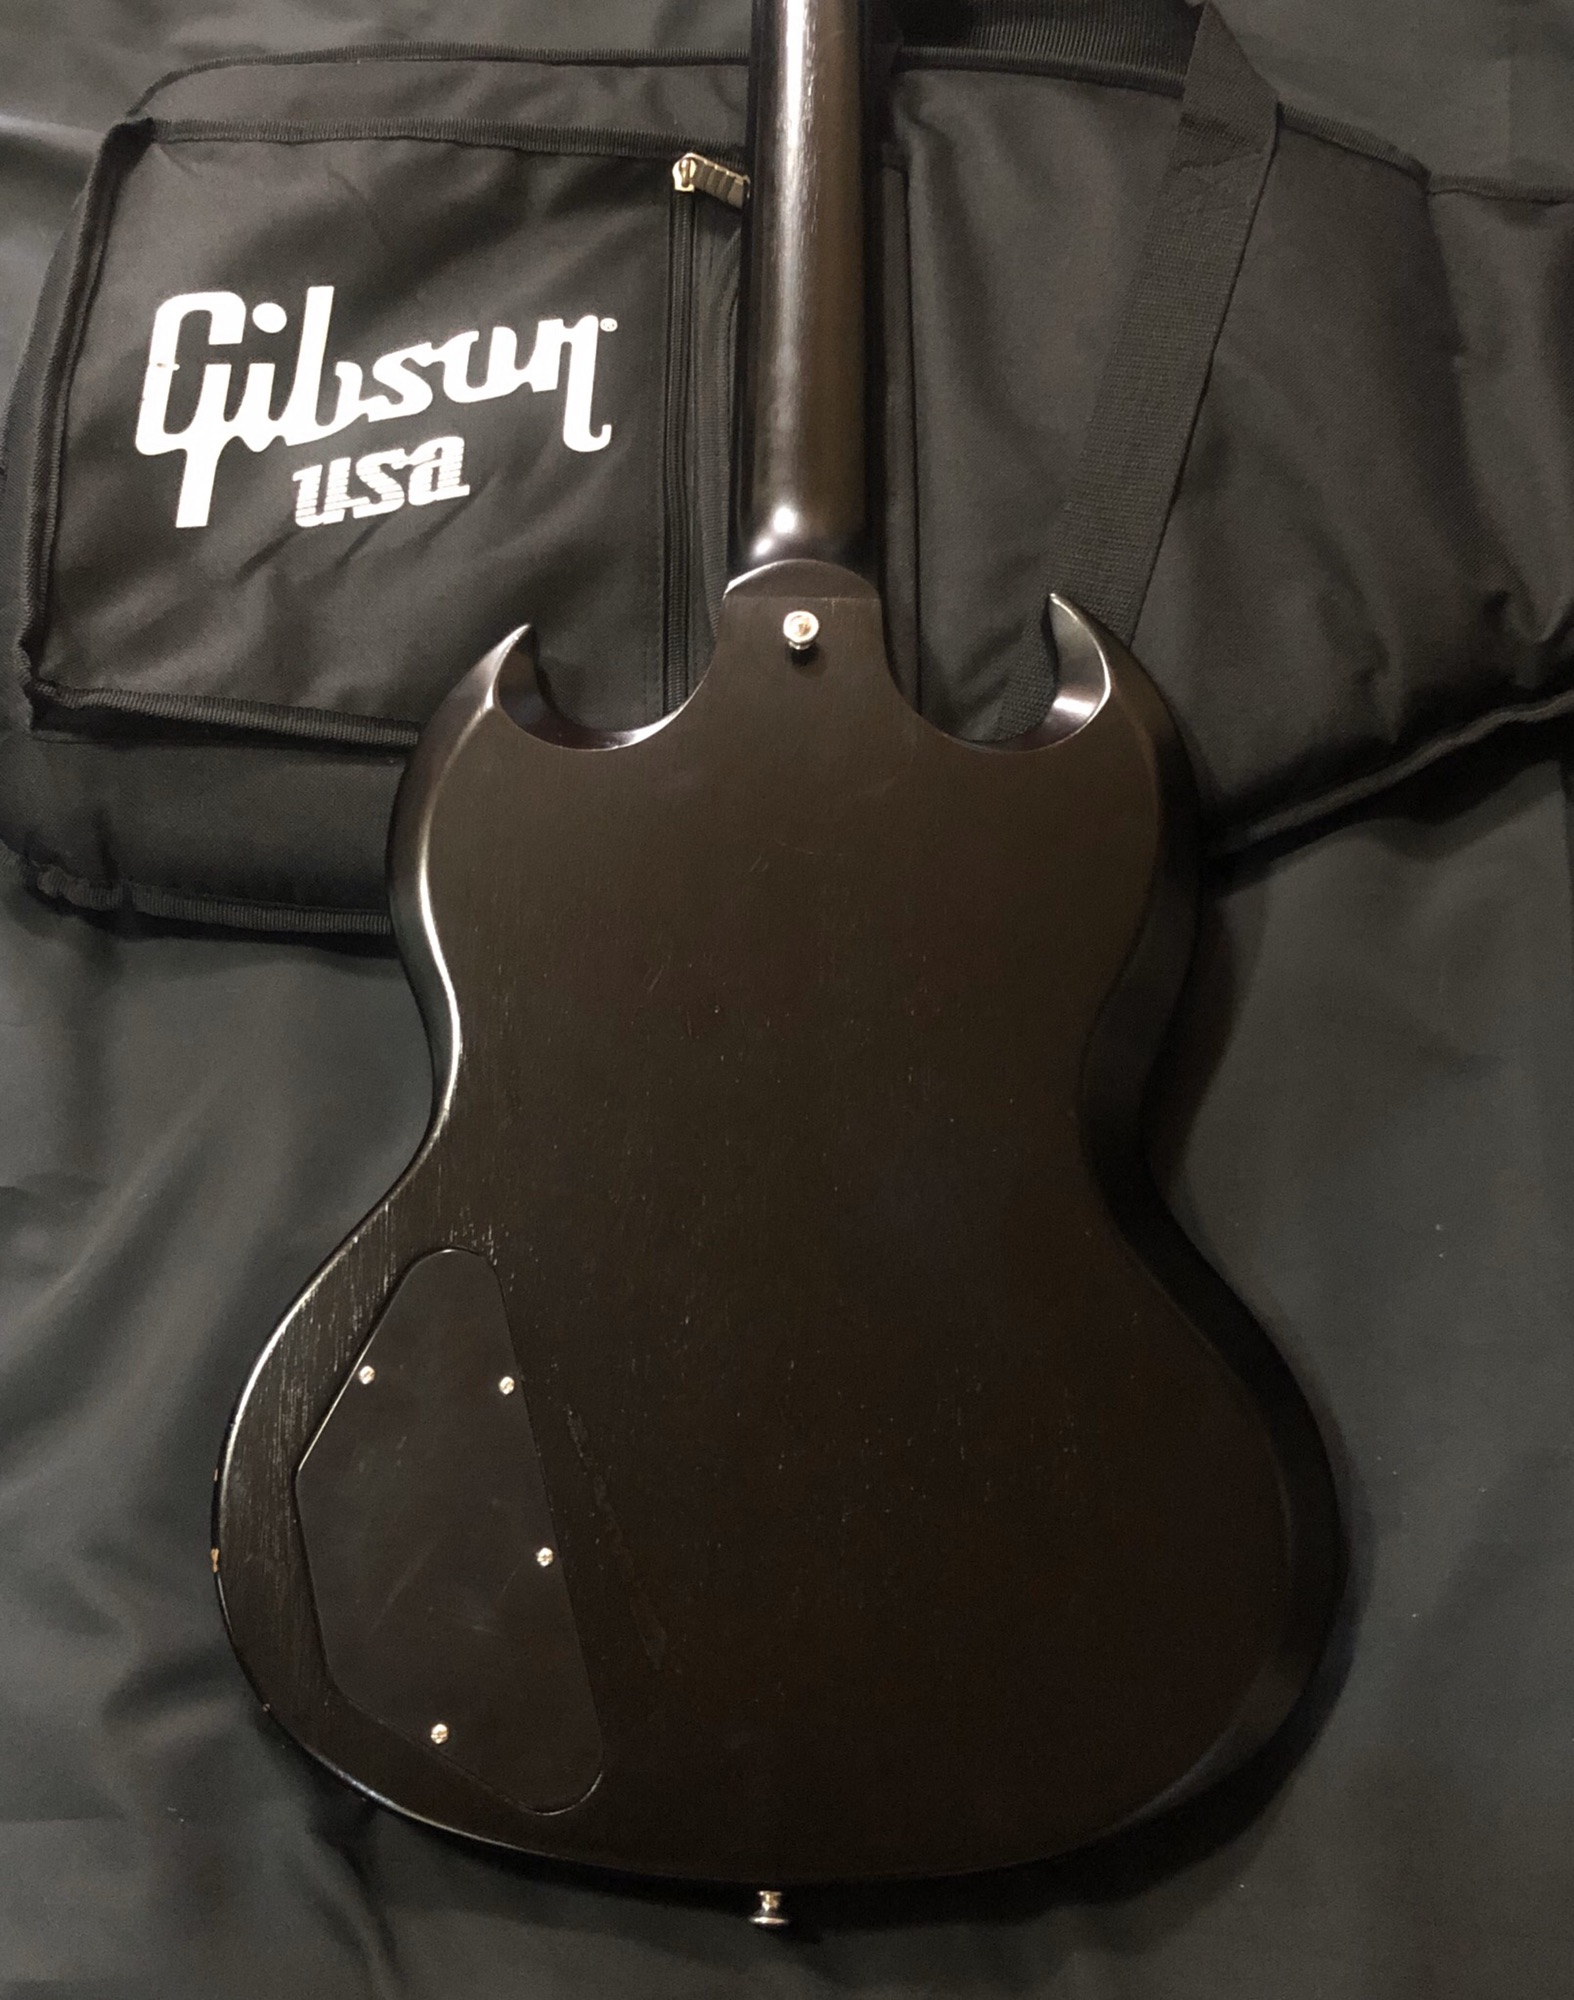 2013 Gibson USA 70s Tribute Dirty Fingers / Vintage Sunburst